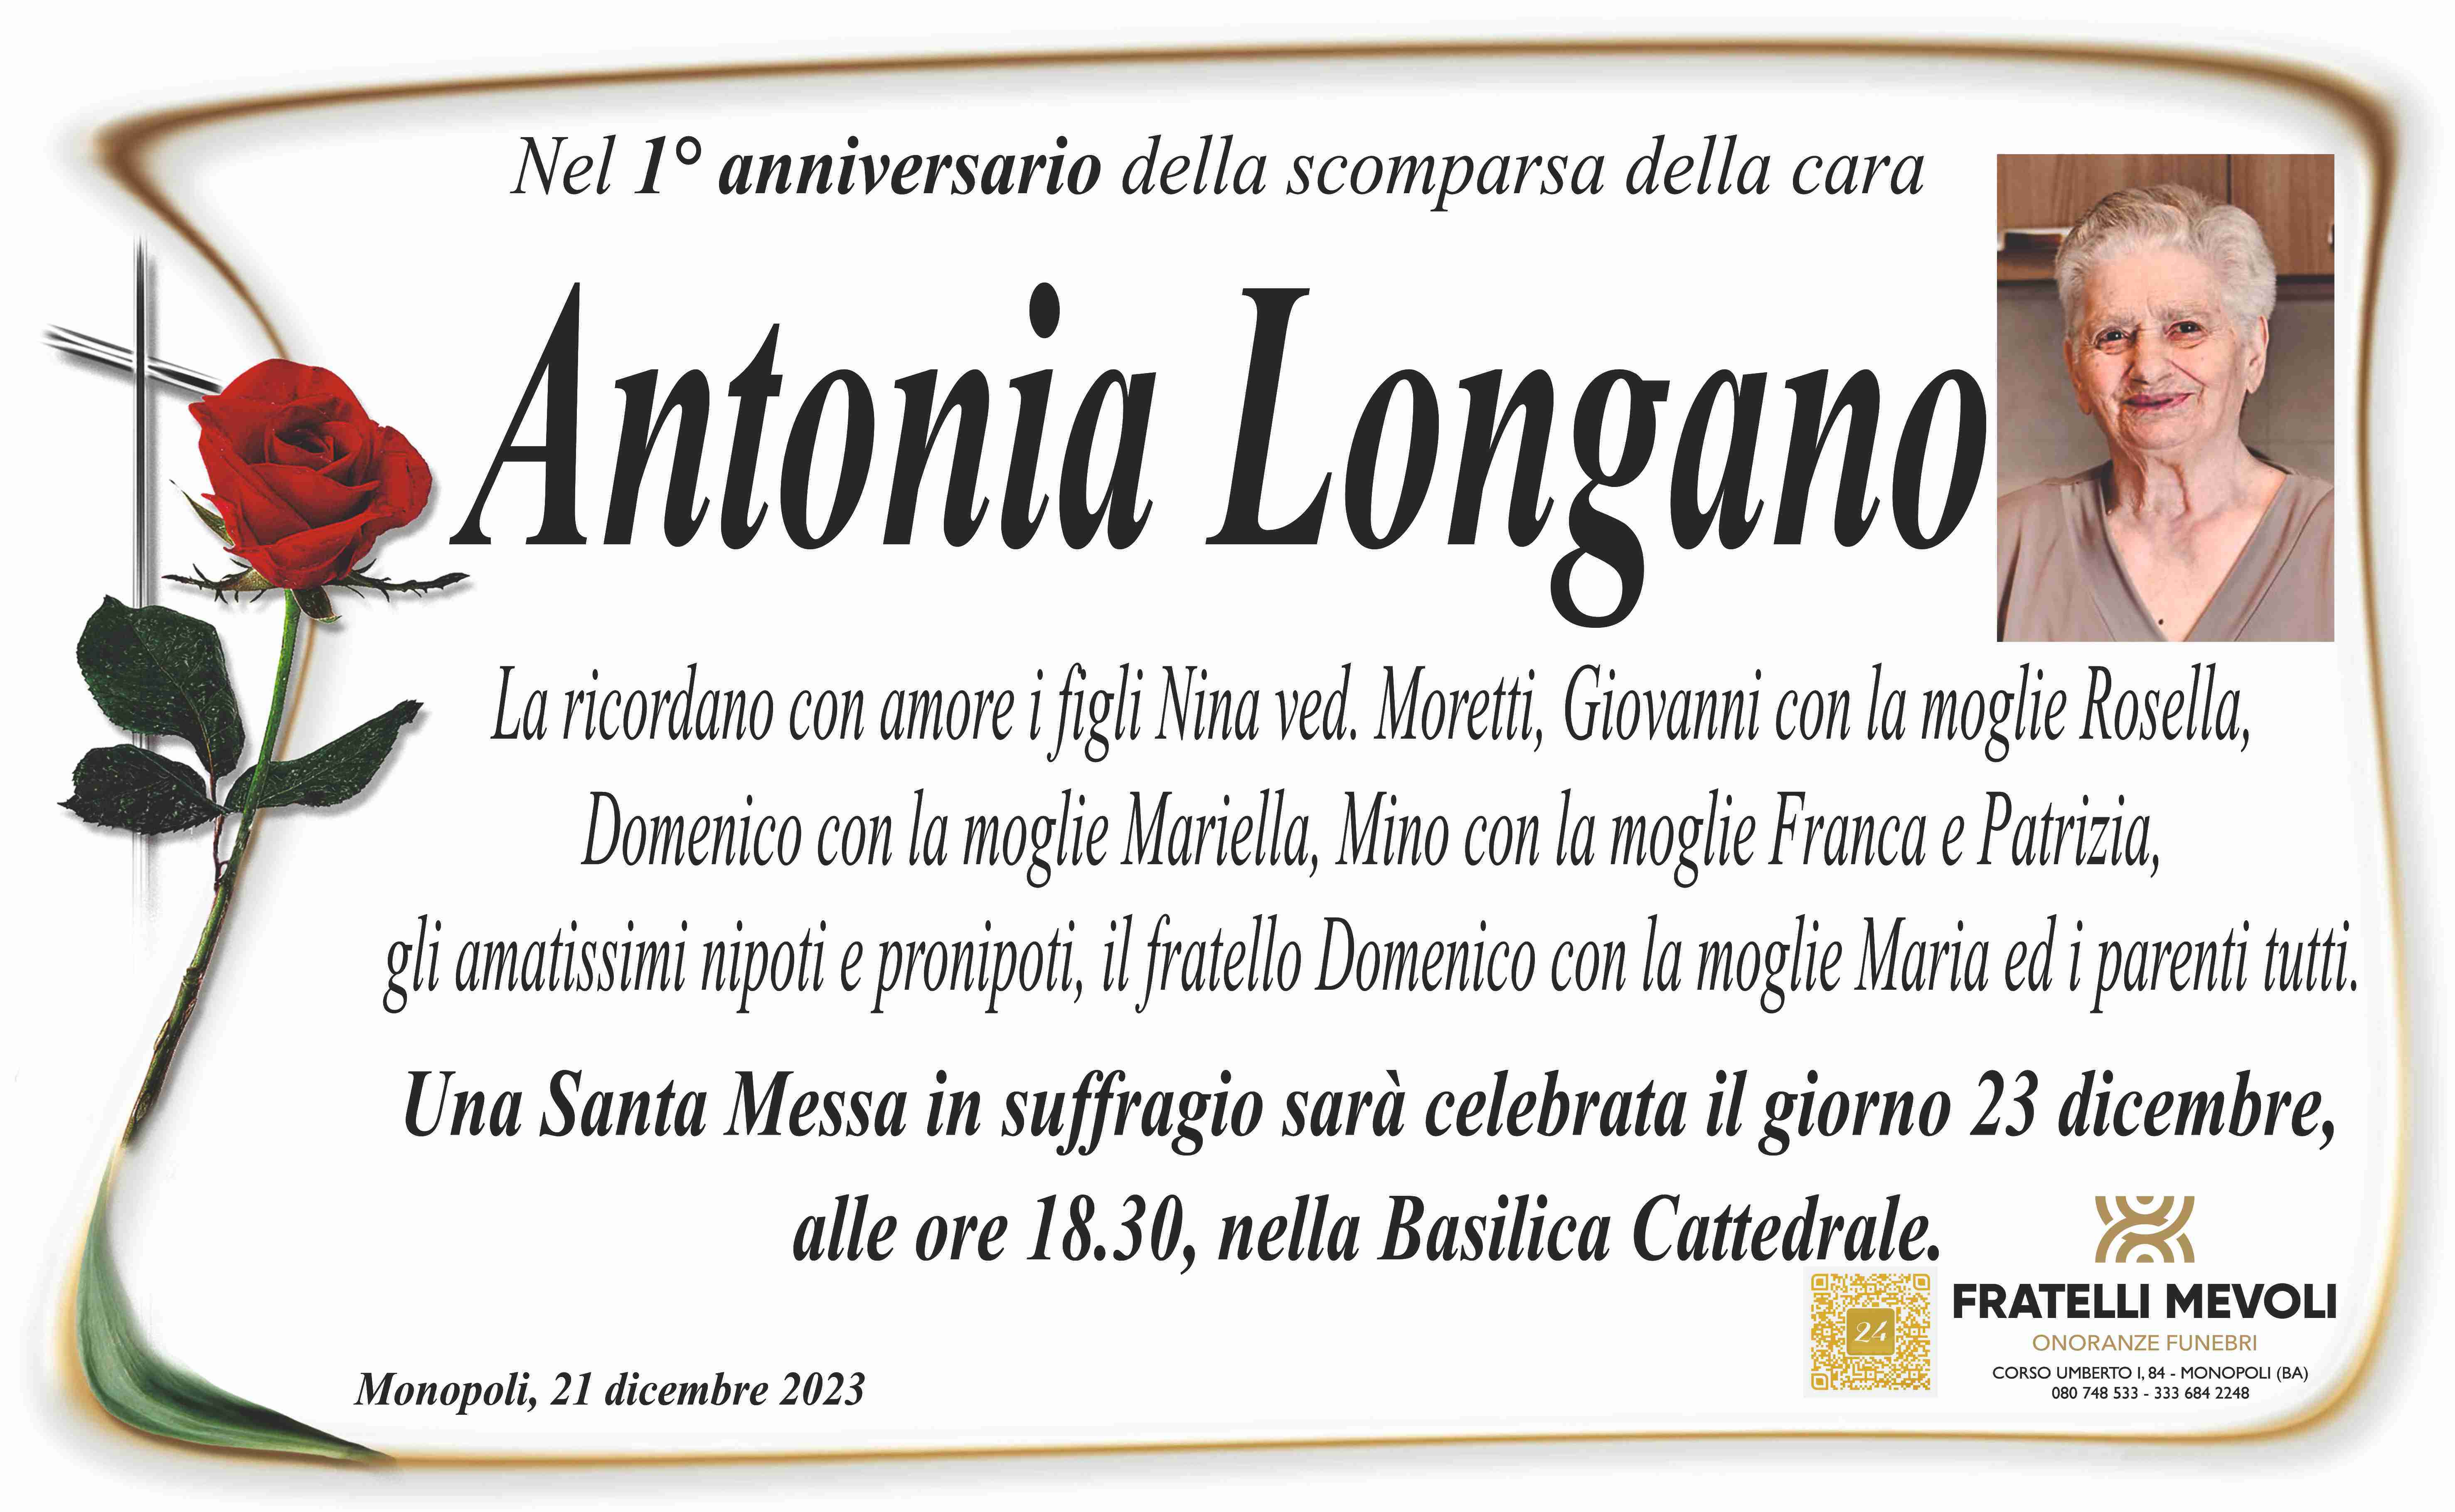 Antonia Longano